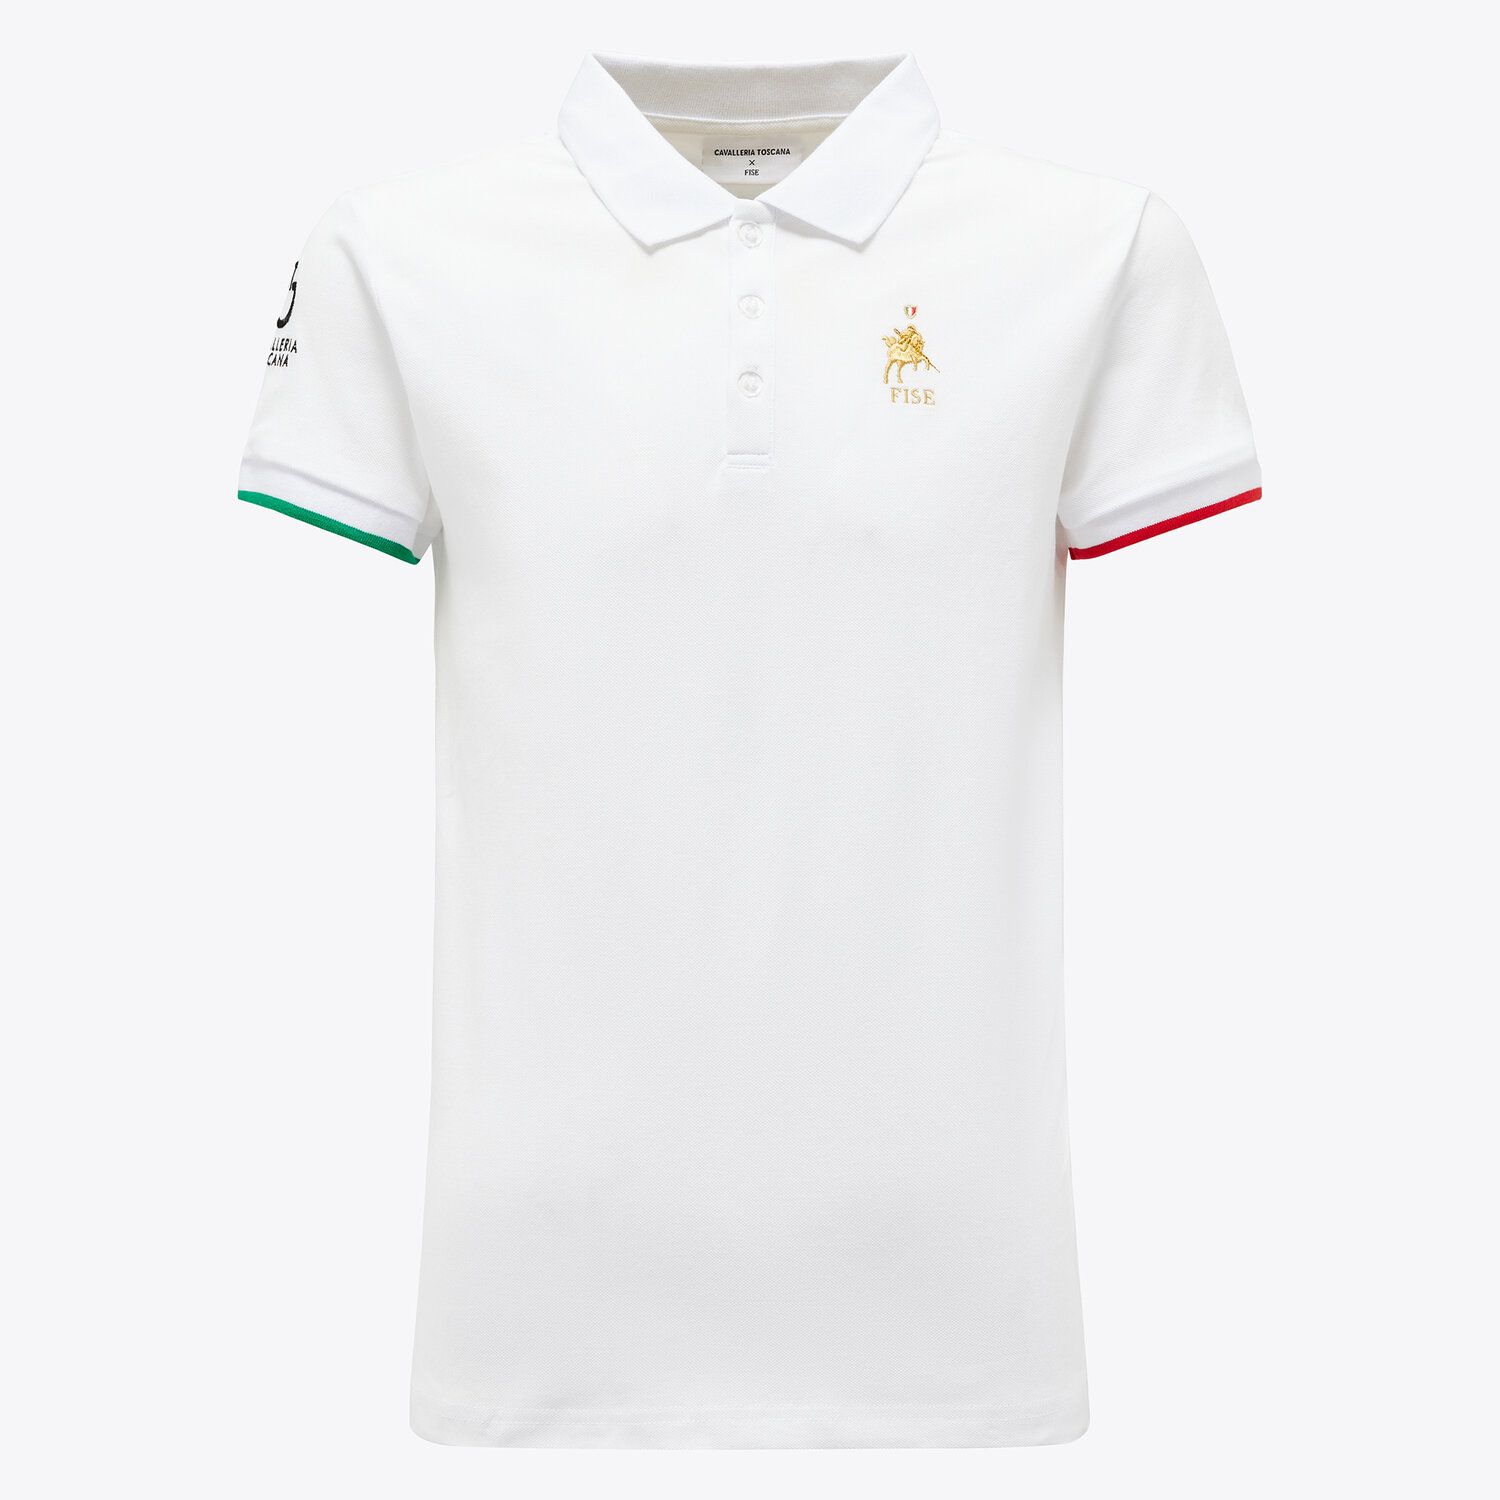 Cavalleria Toscana FISE short sleeved training Polo for boys WHITE-1